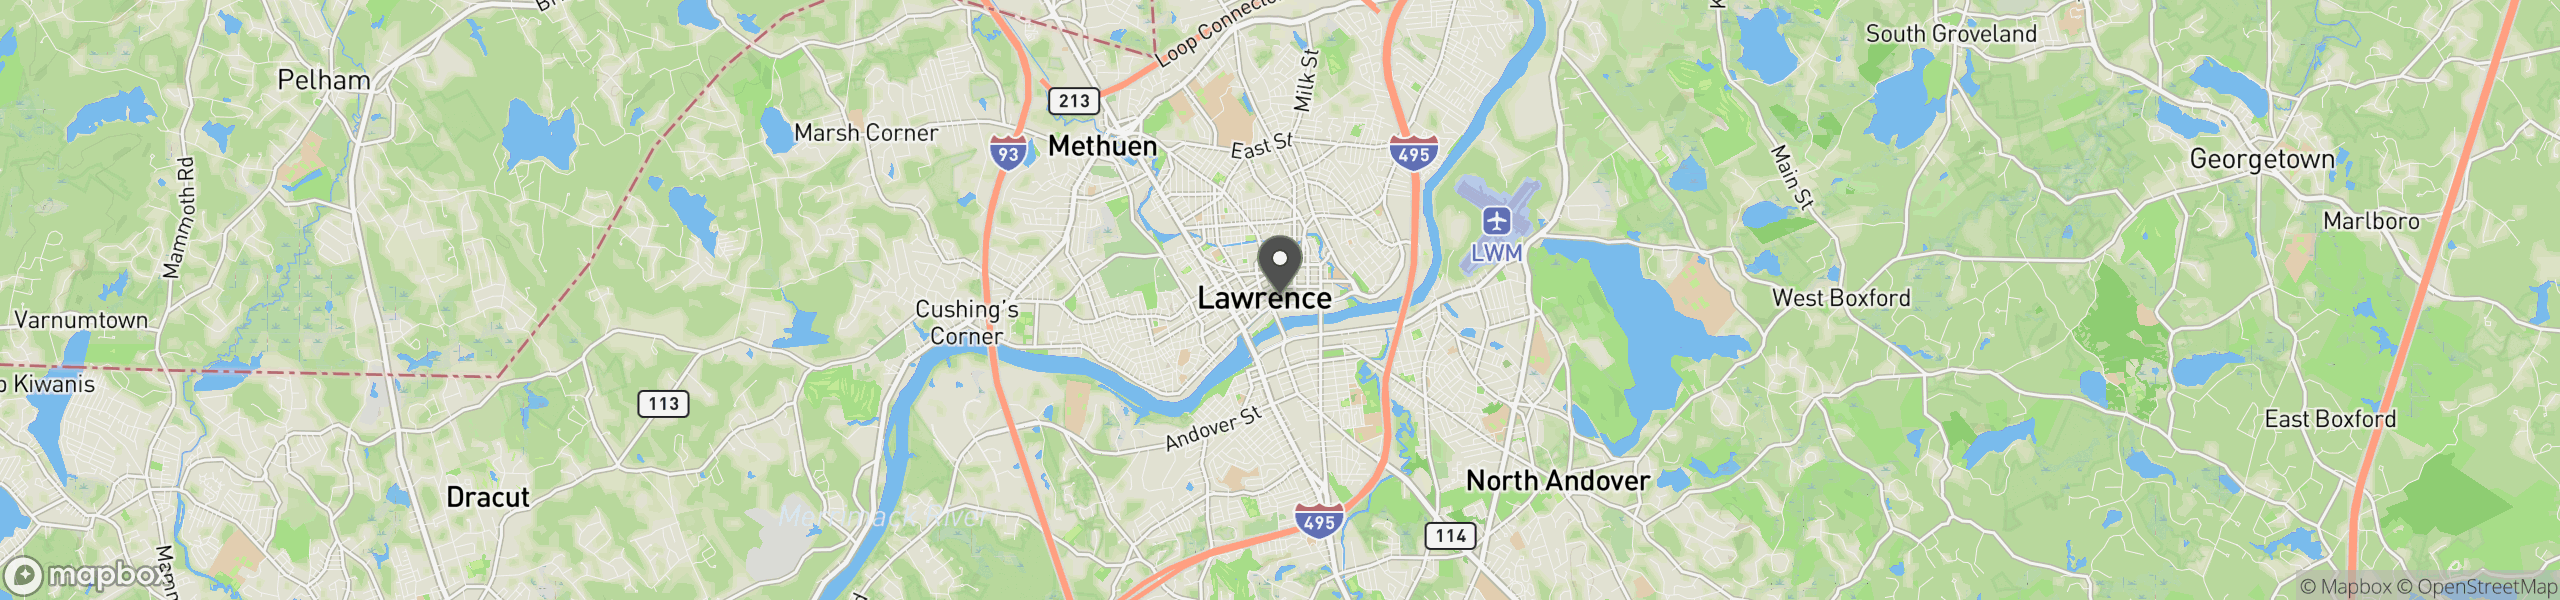 Lawrence, MA